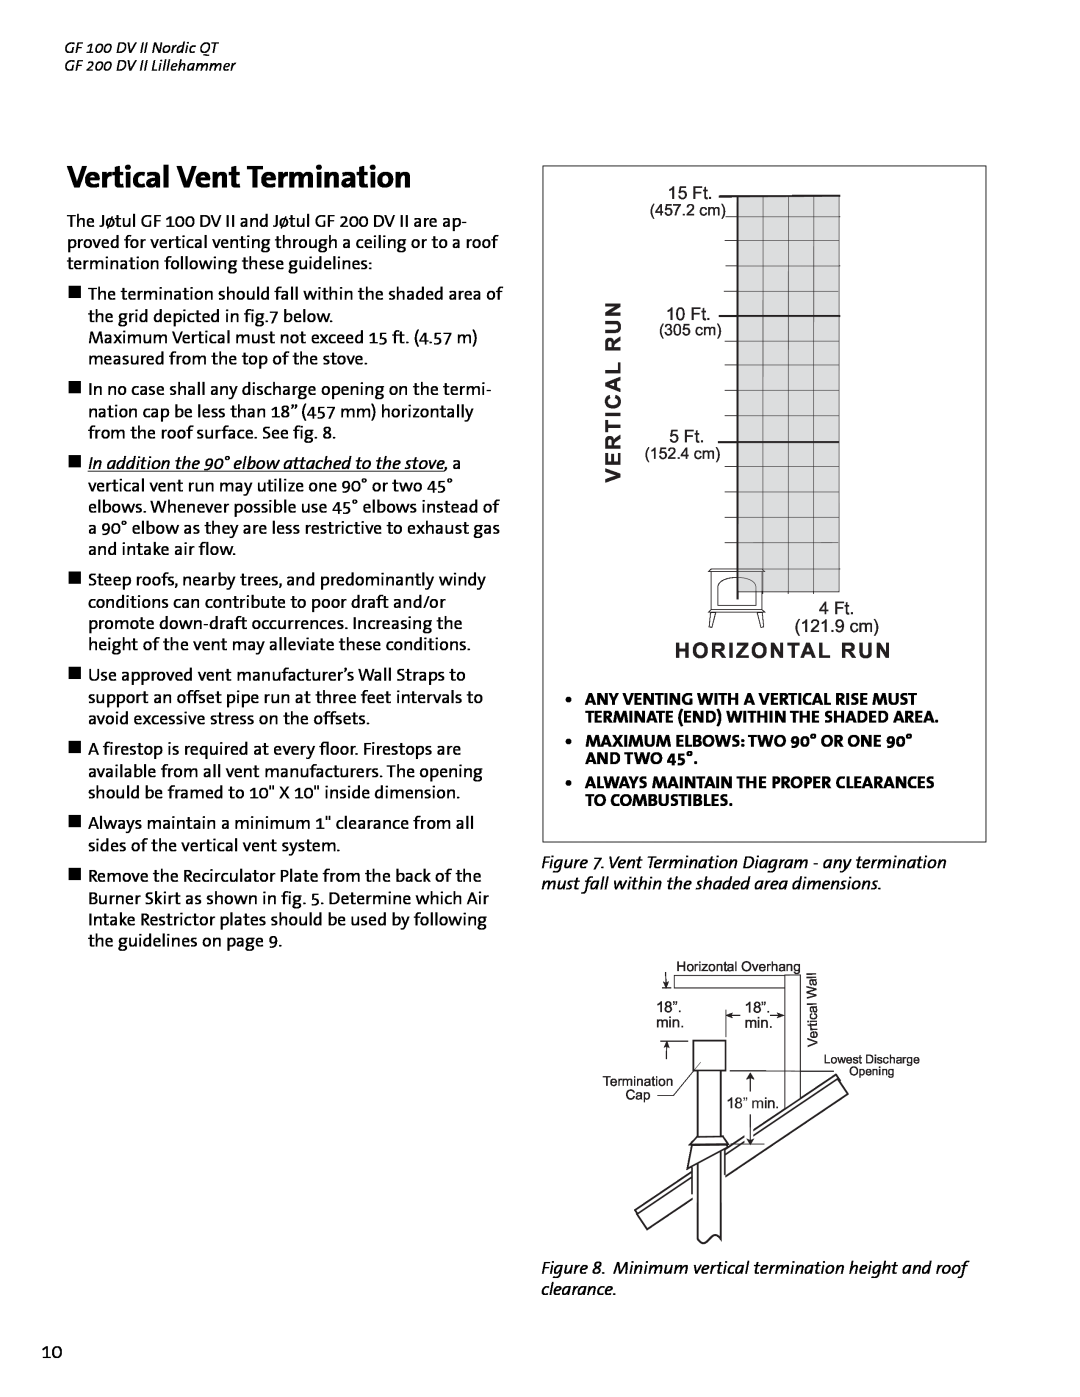 Jotul GF 100 DV II, GF 200 DV II manual Vertical Vent Termination, Horizontal Run, 15Ft, 10 Ft, 4 Ft 121.9 cm 